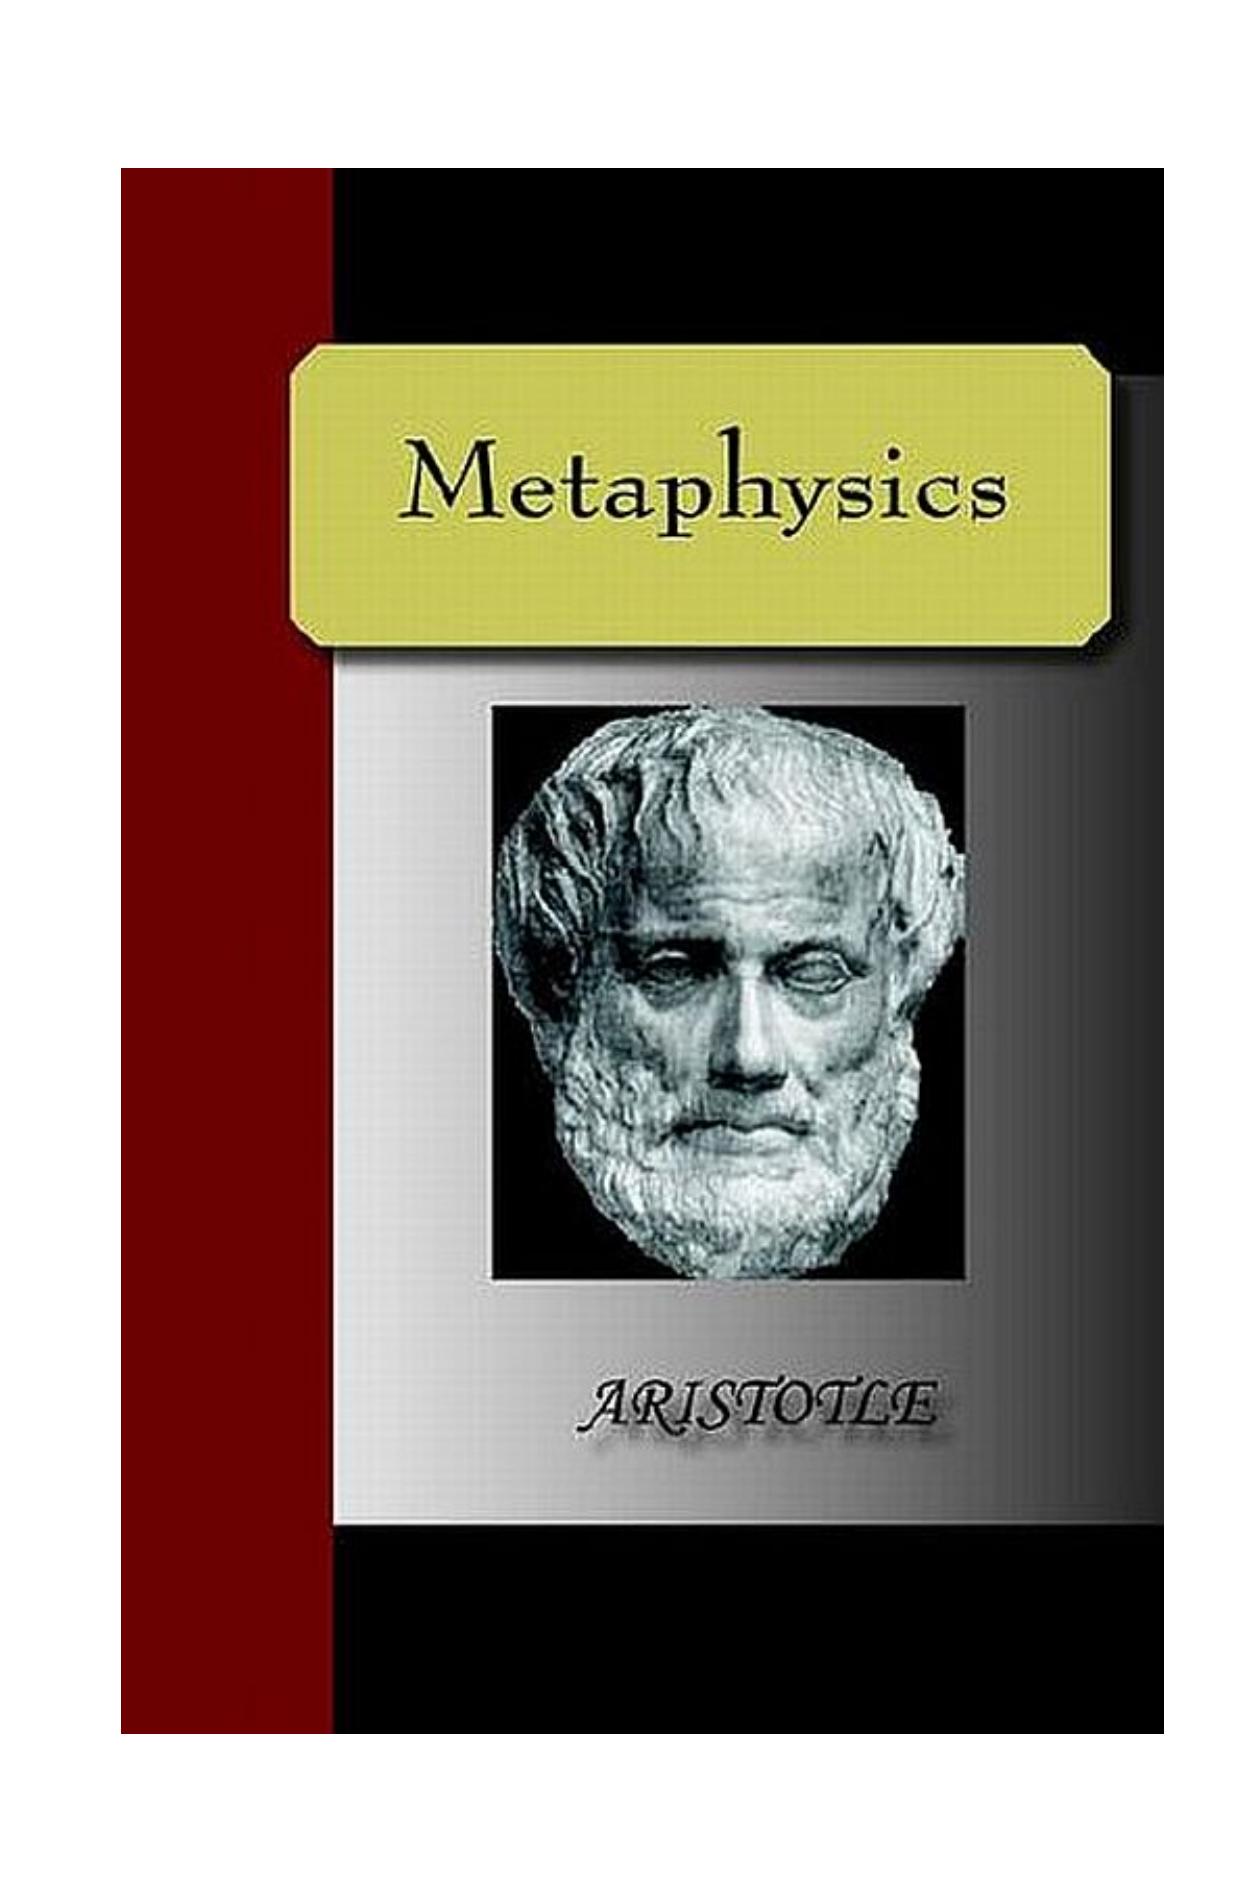 Metaphysics - Aristotle by Aristotle